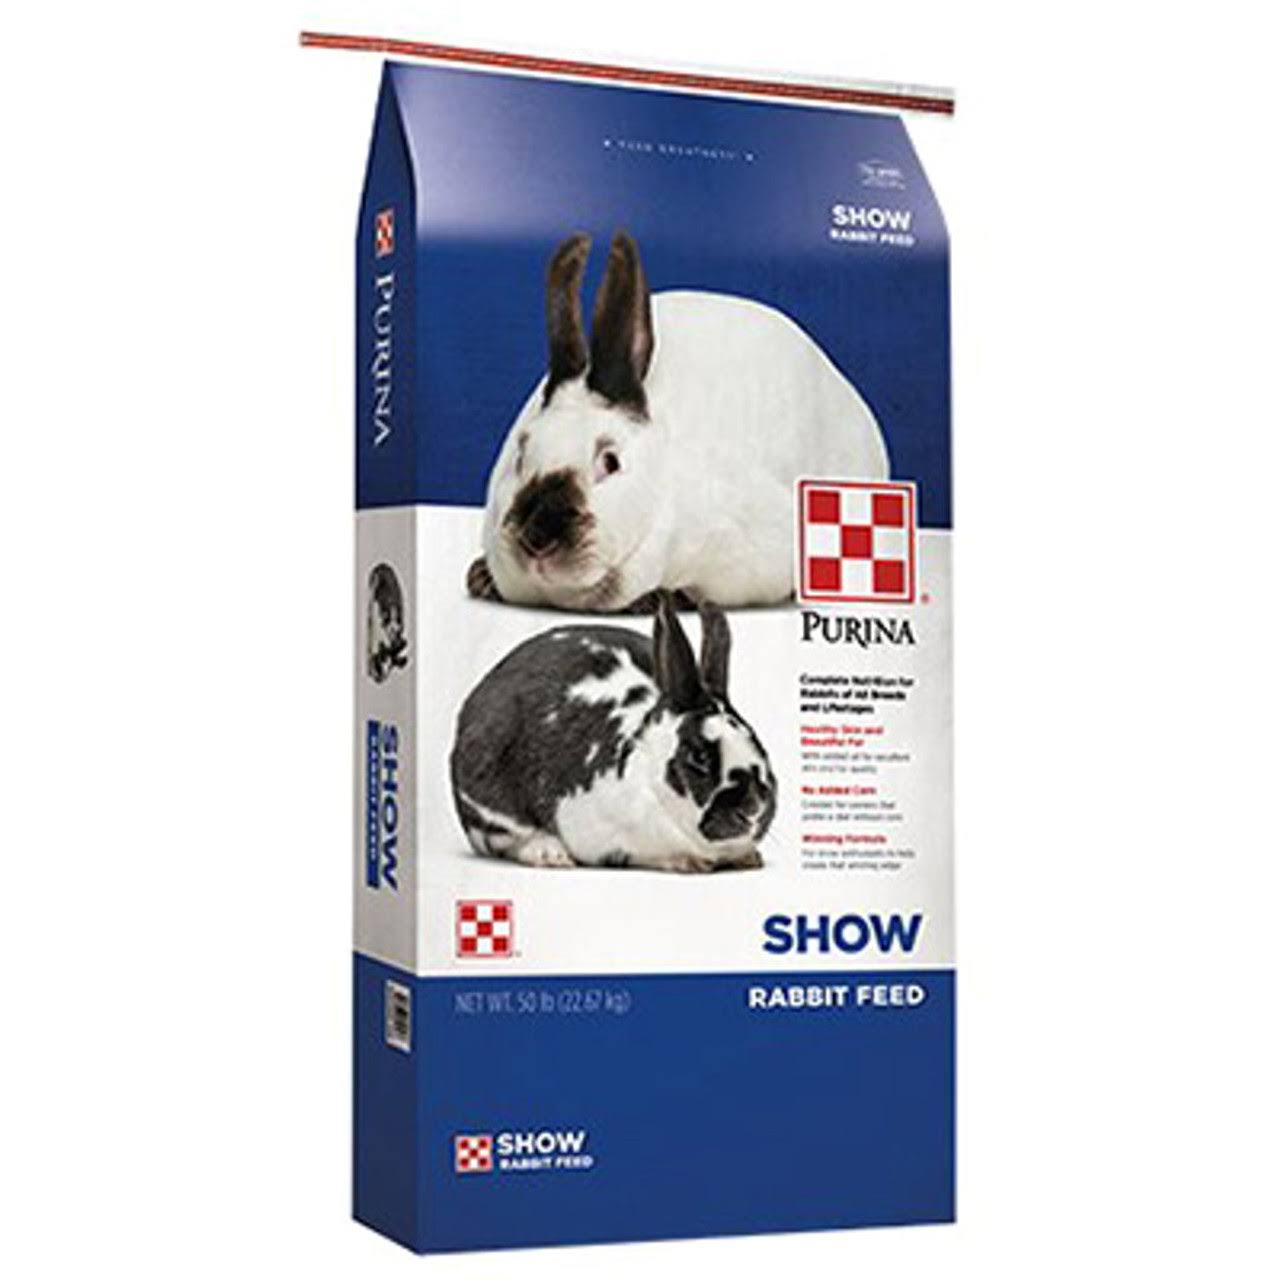 Purina Rabbit Show FEED, 50 lbs.